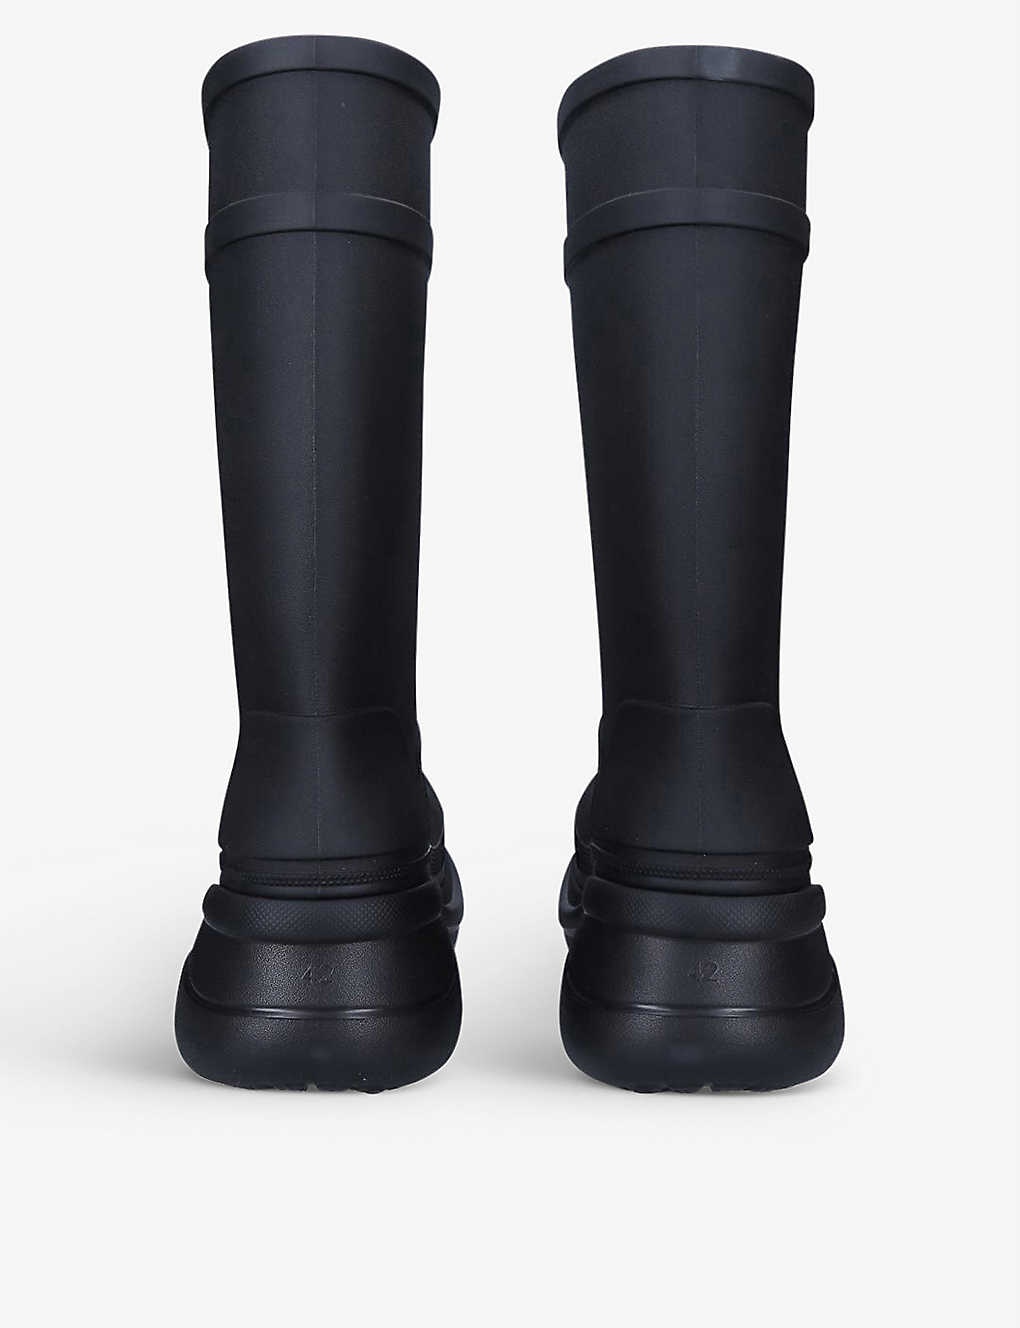 Balenciaga x Crocs chunky rubber boots - 2